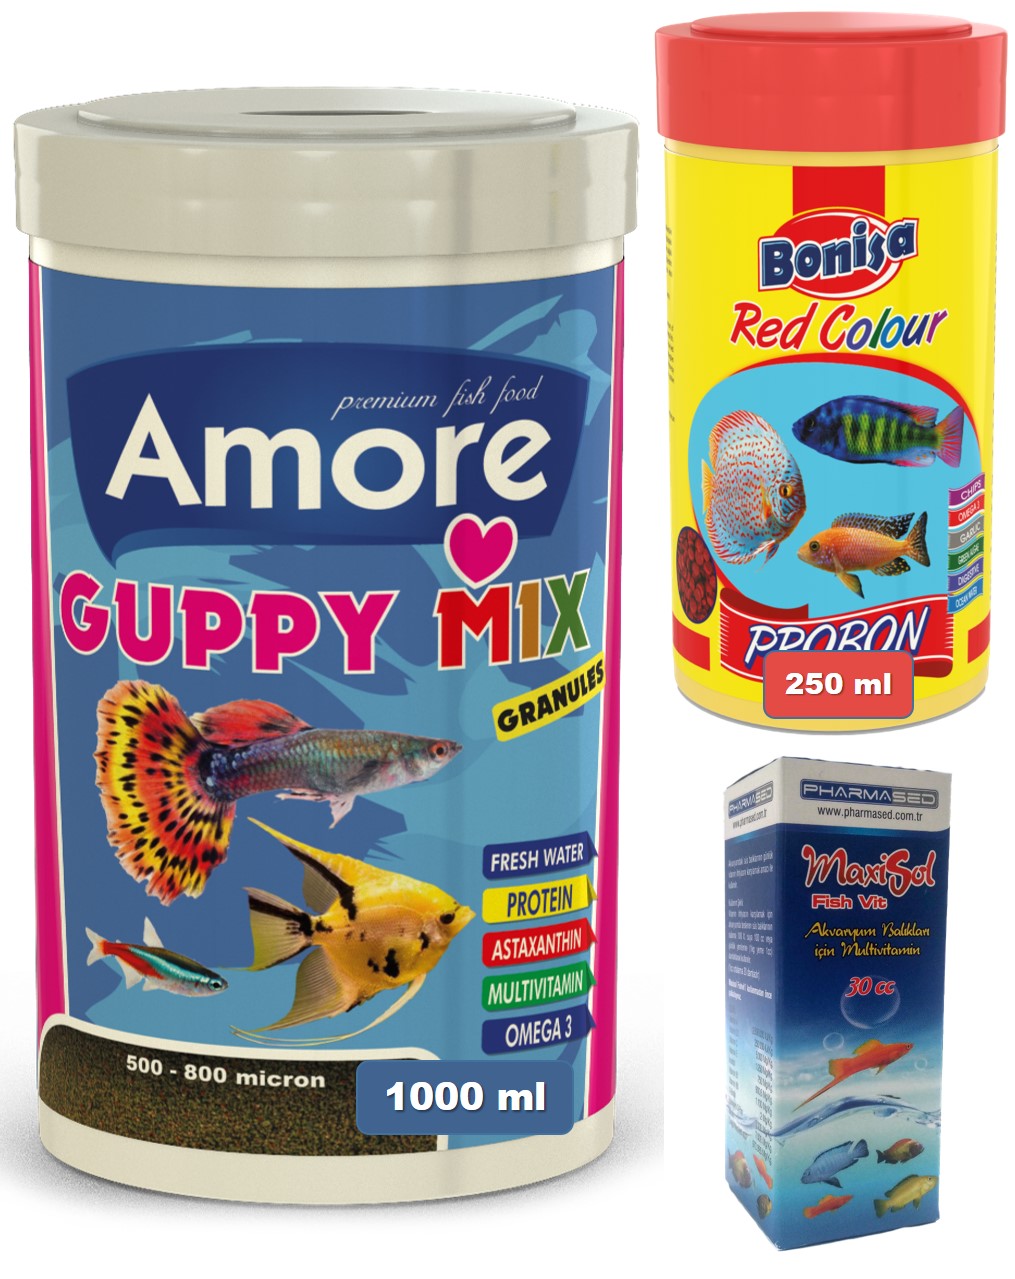 Guppy Mix Granules 1 Lt ve Bonisa Red Colour Tropikal Renklendirme Yemi 250 ml ve Vitamin